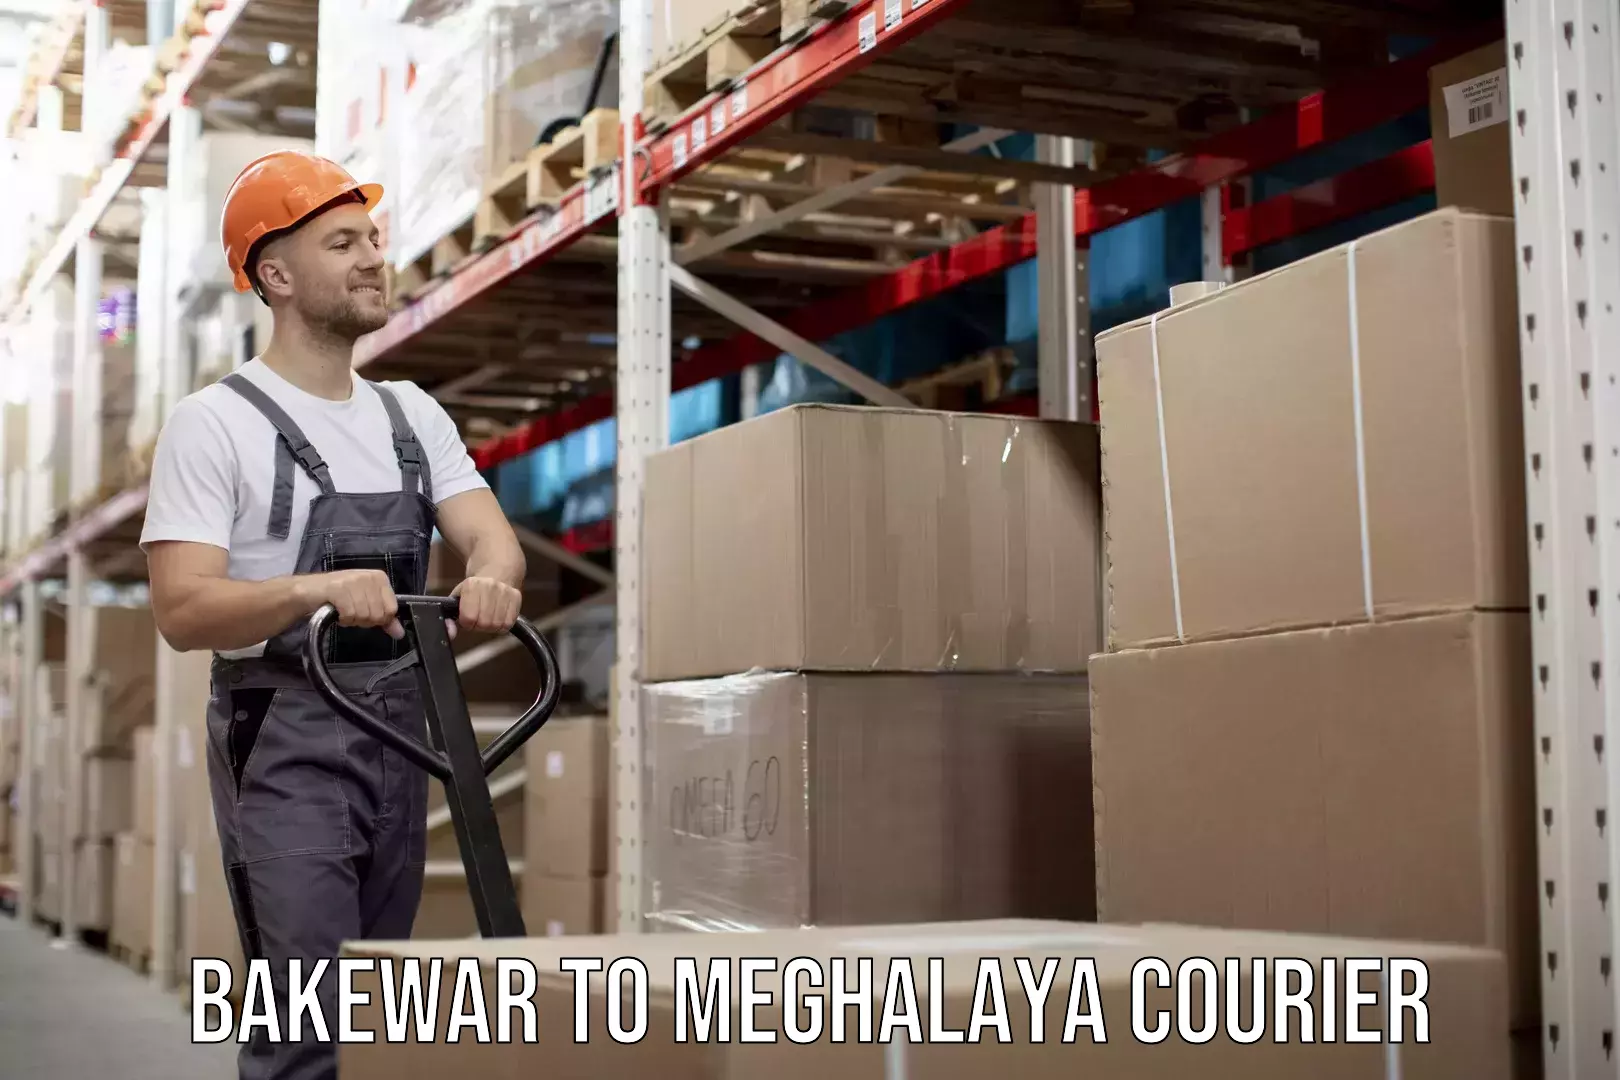 24-hour courier service Bakewar to Meghalaya